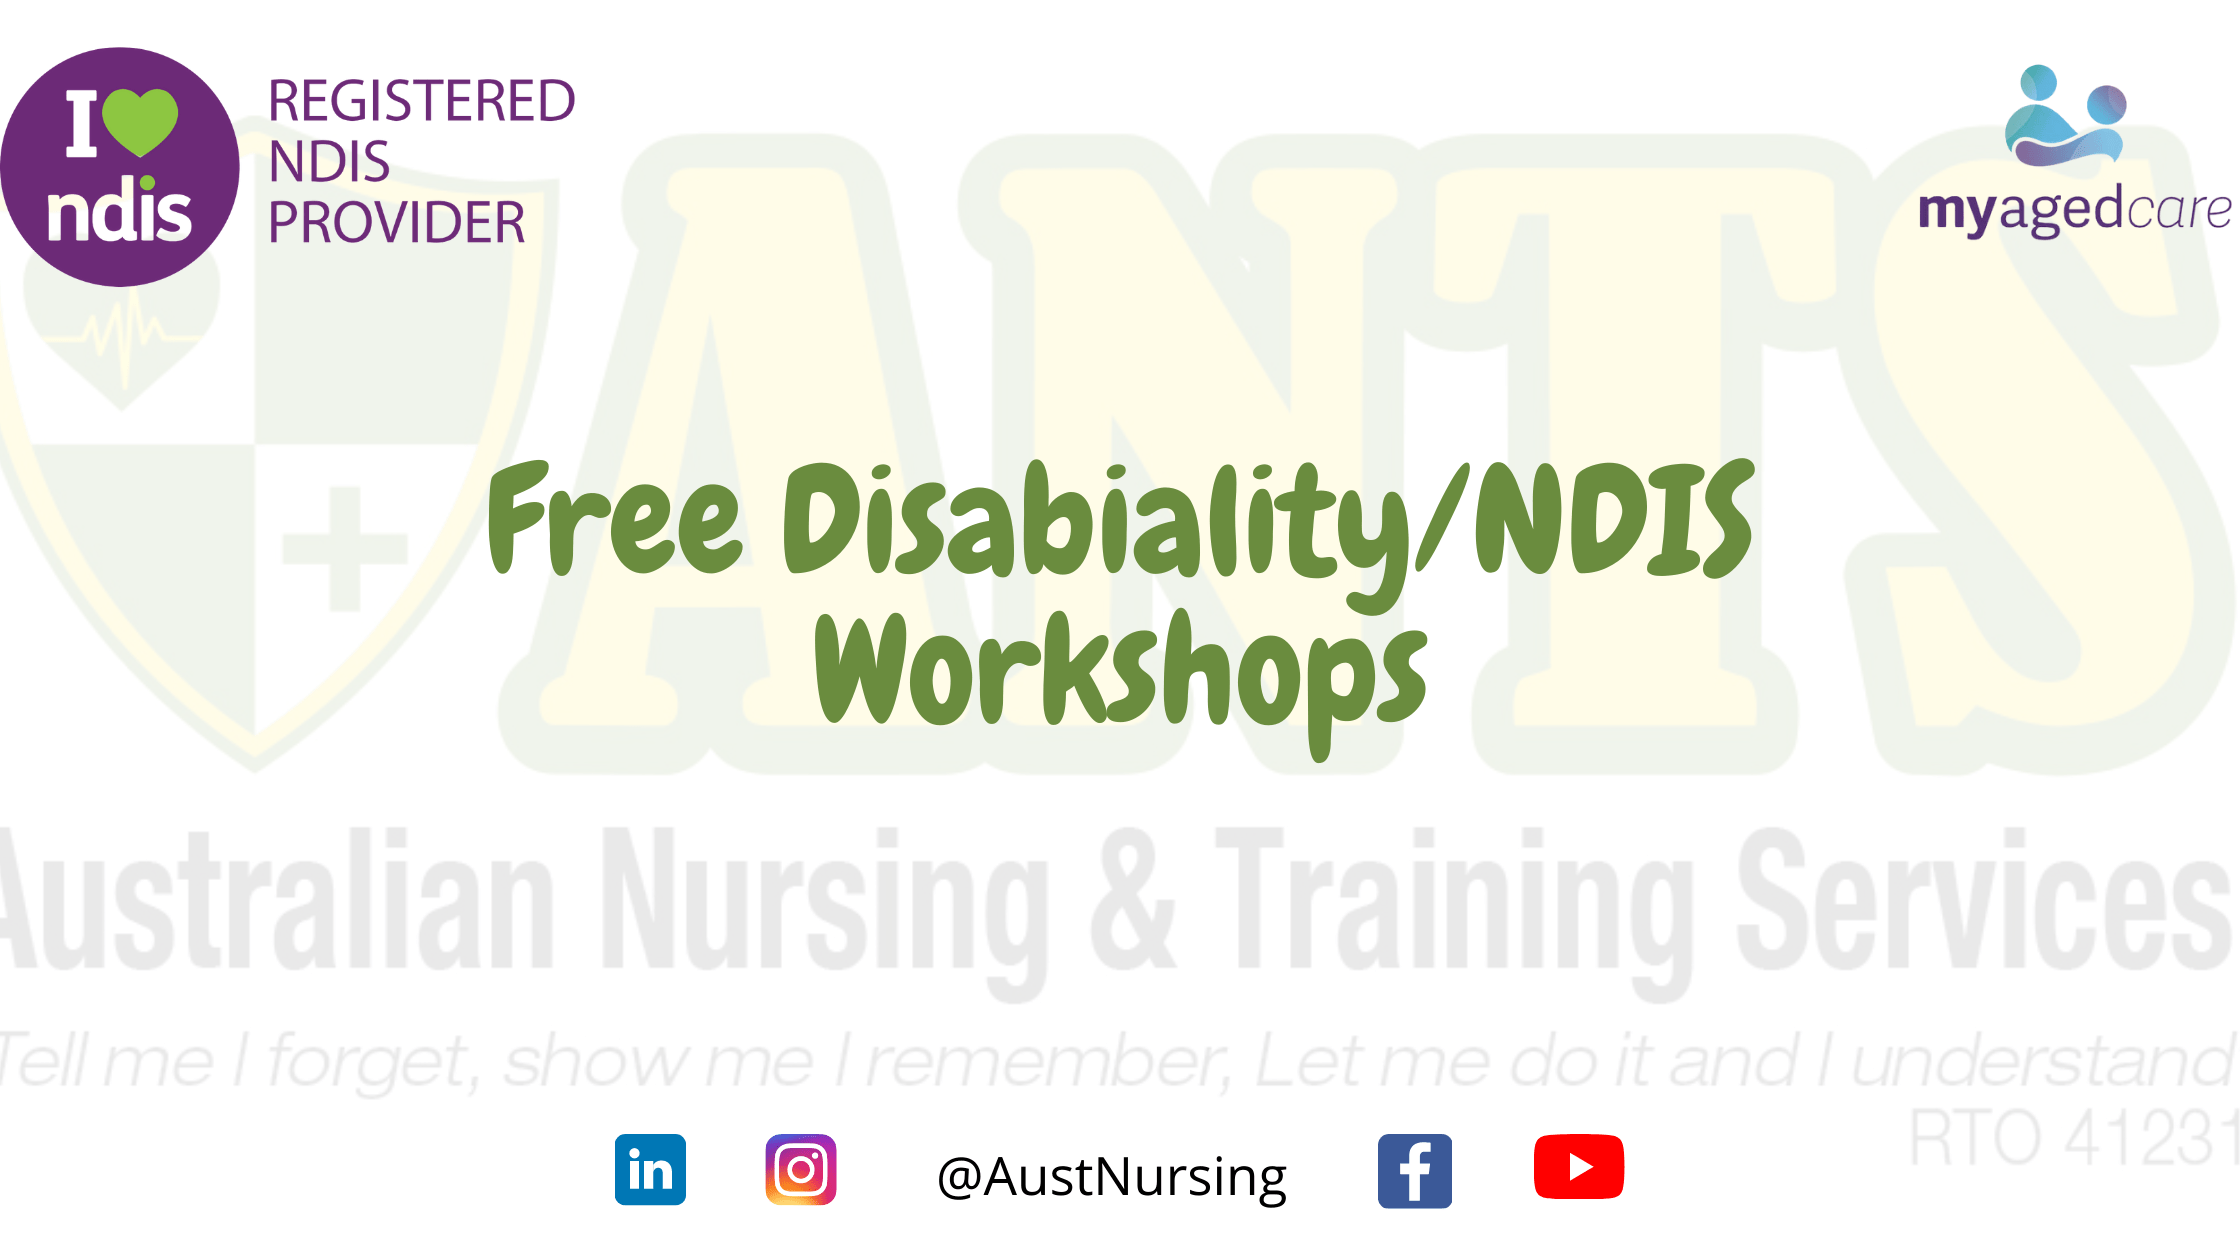 Free Disability/NDIS Workshops